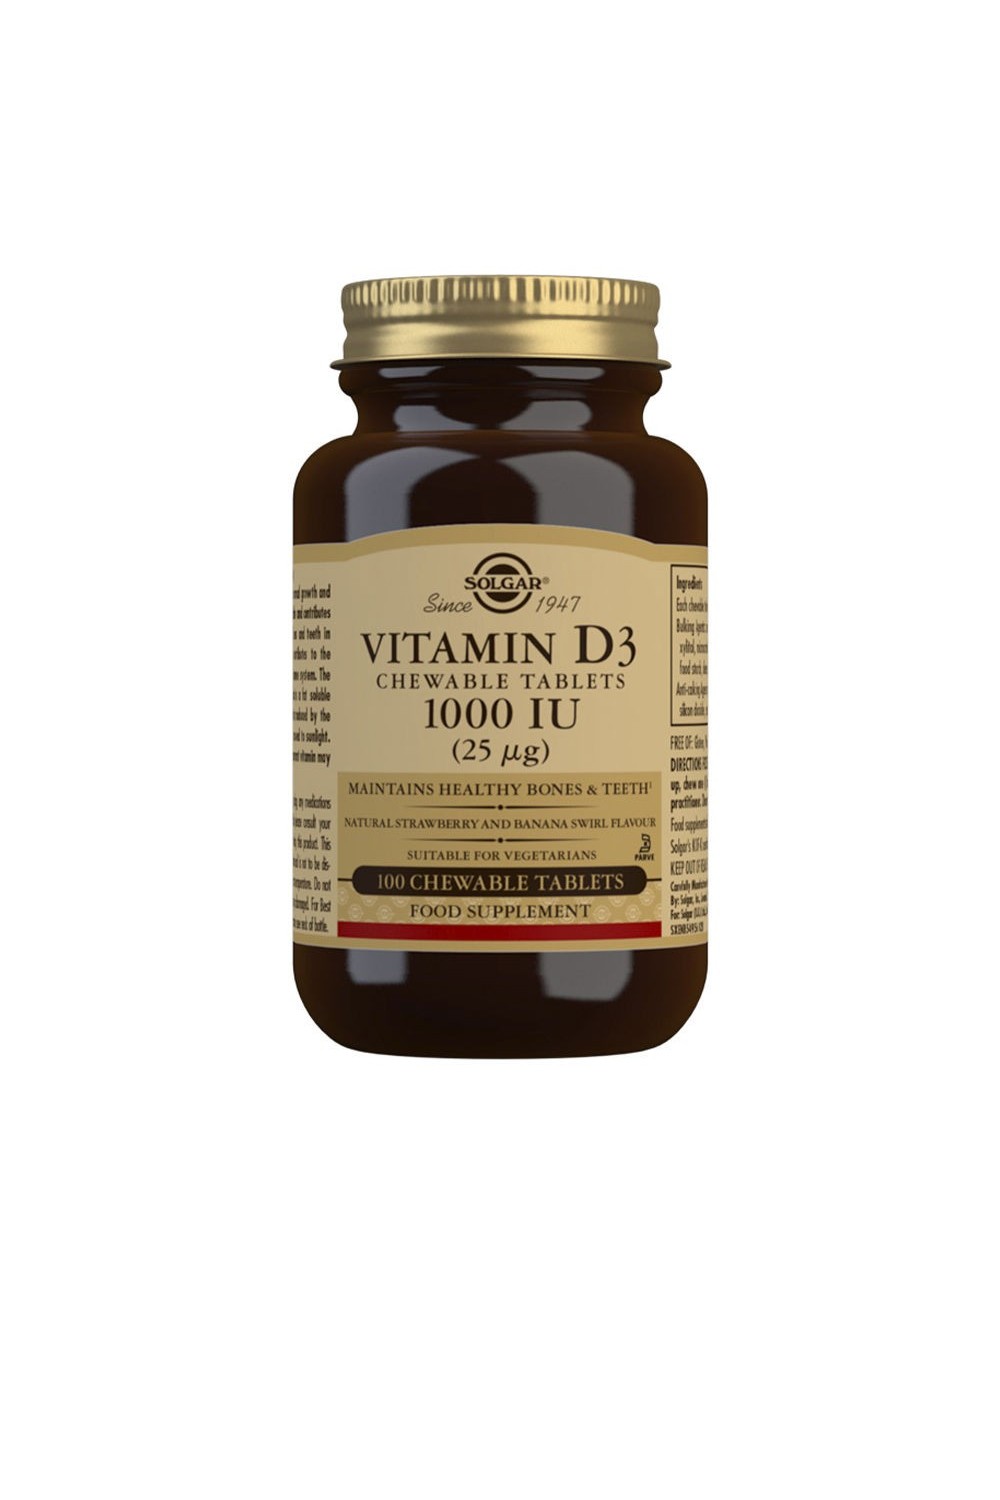 Solgar Vitamin D3 1000 IU 25cmg Cholecalciferol 100 Tablets